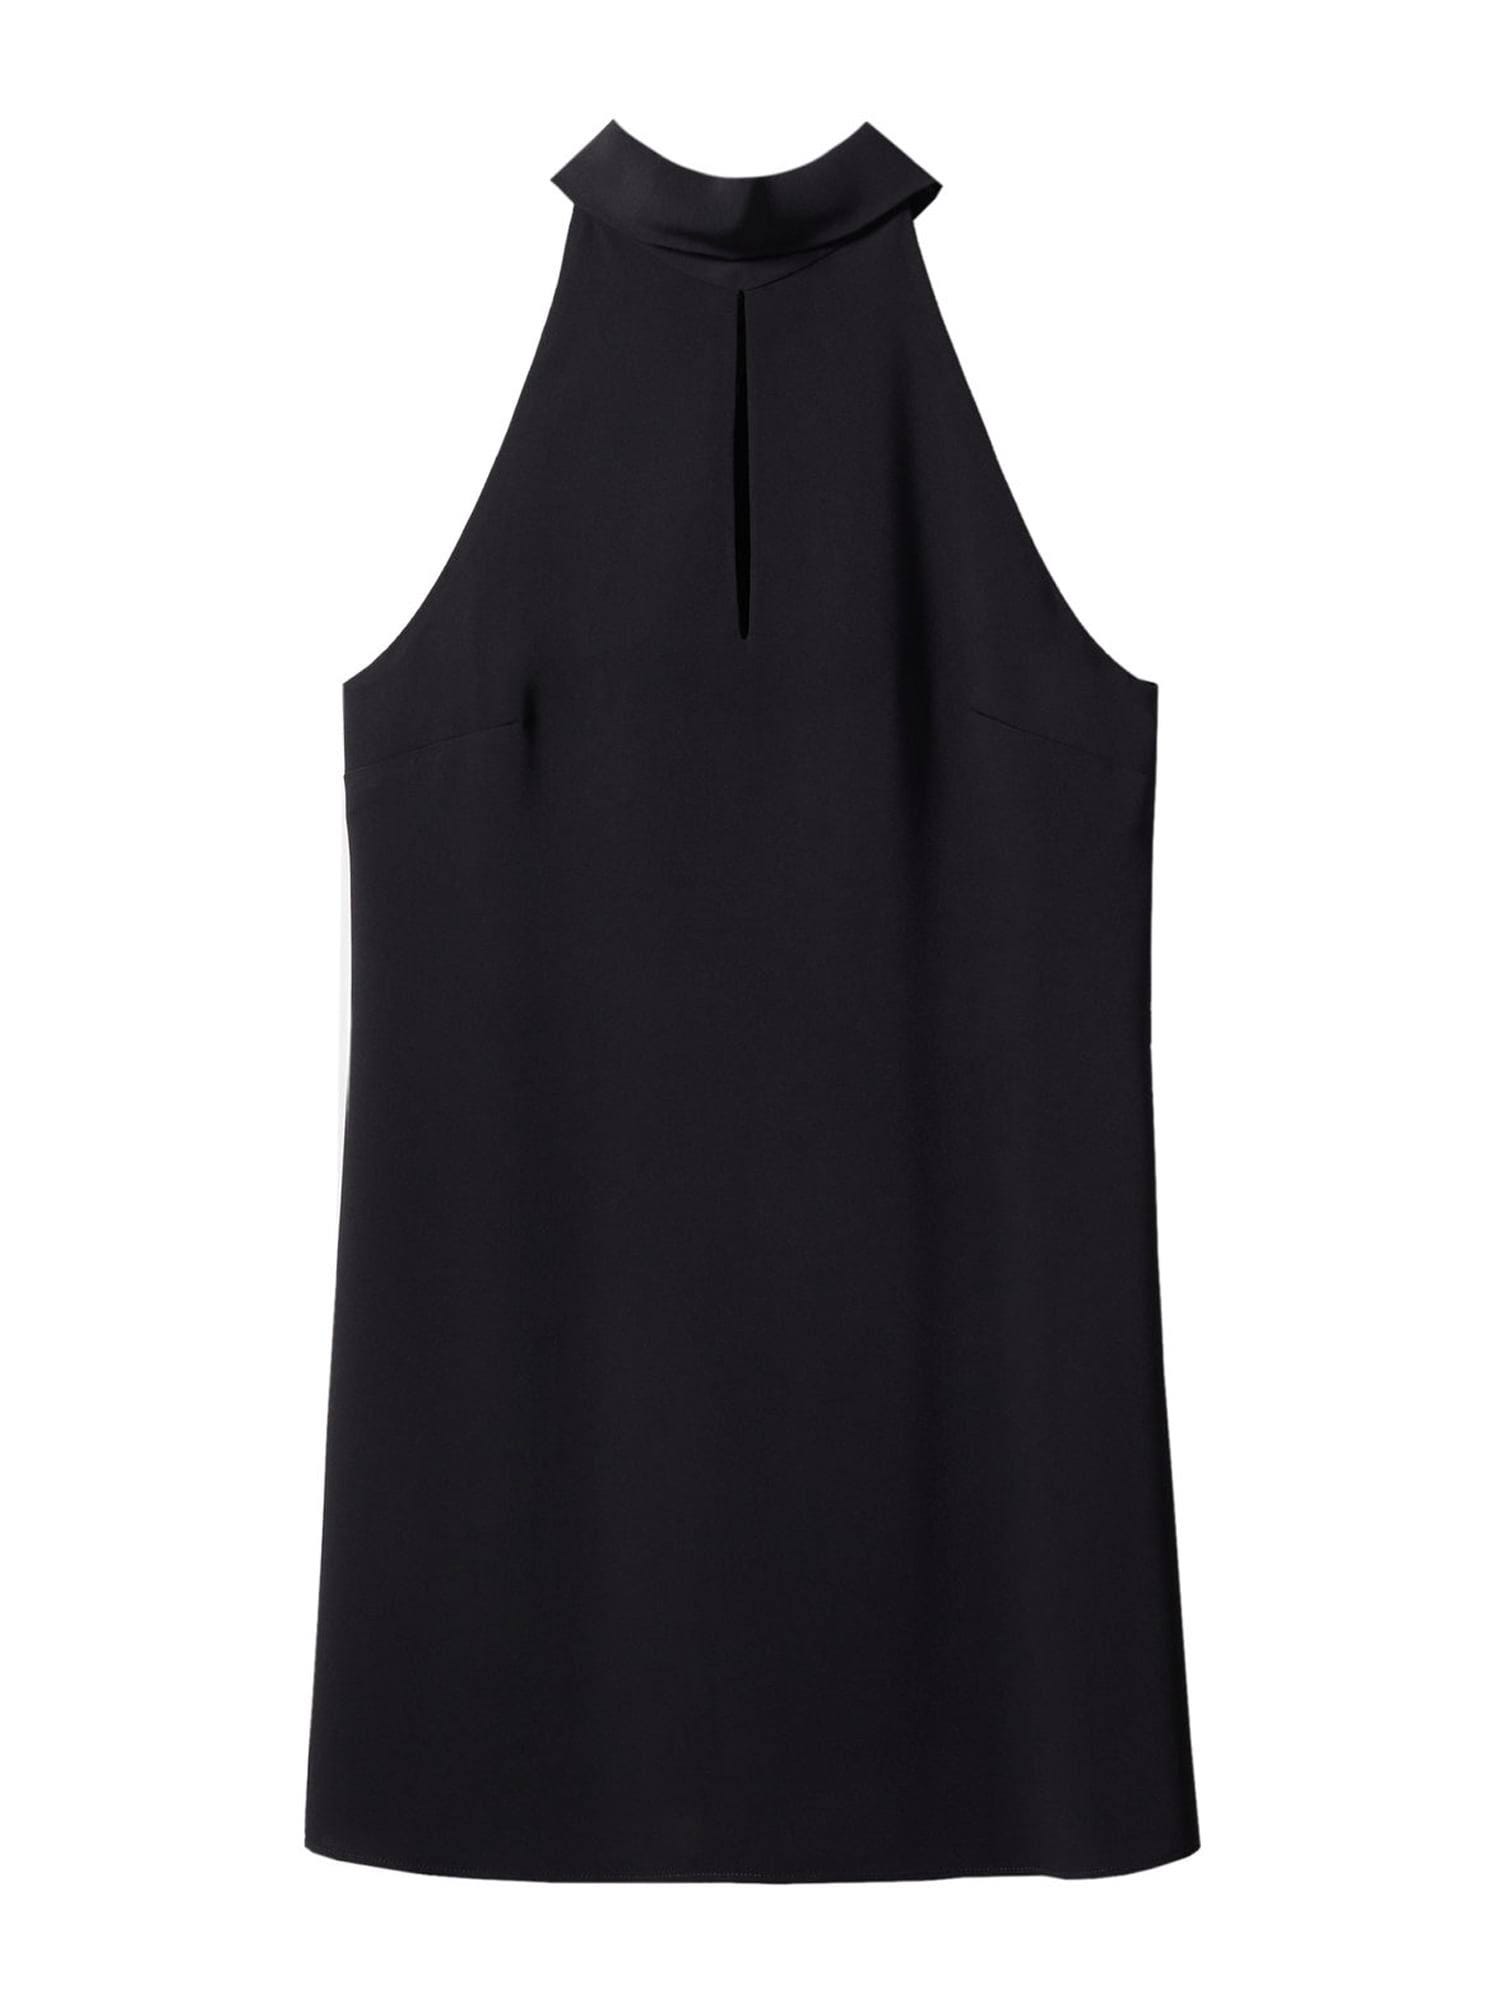 Stylish Black Halter-Neck Dress with Bow | Image